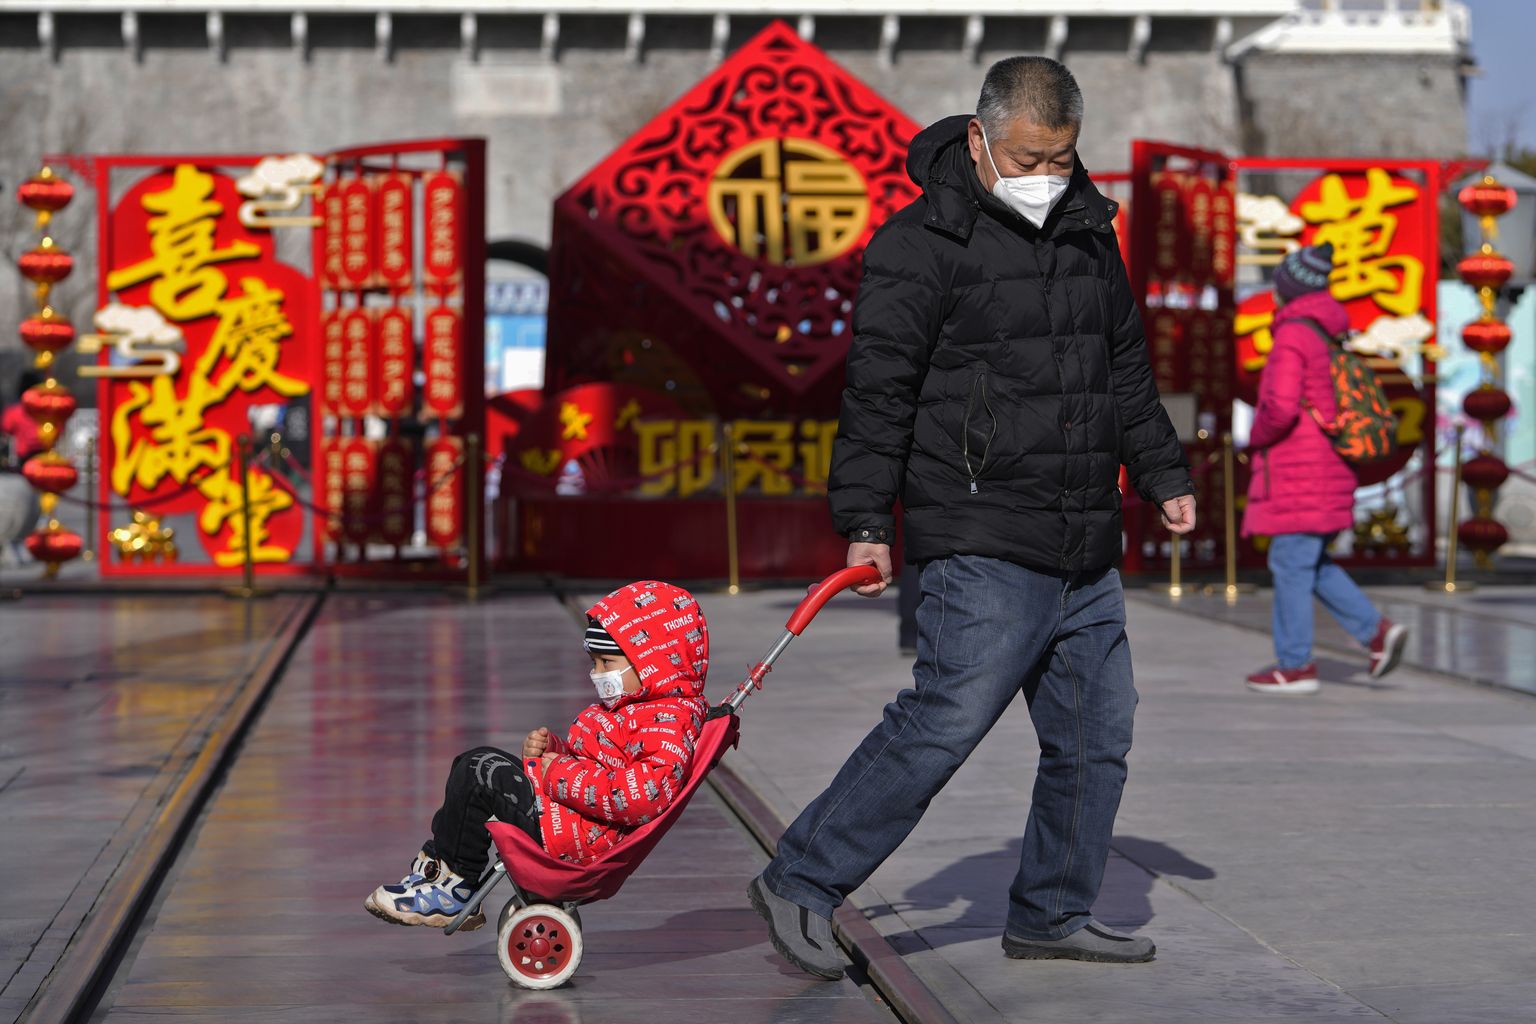 Mee Pekingis lapsega jalutamas.